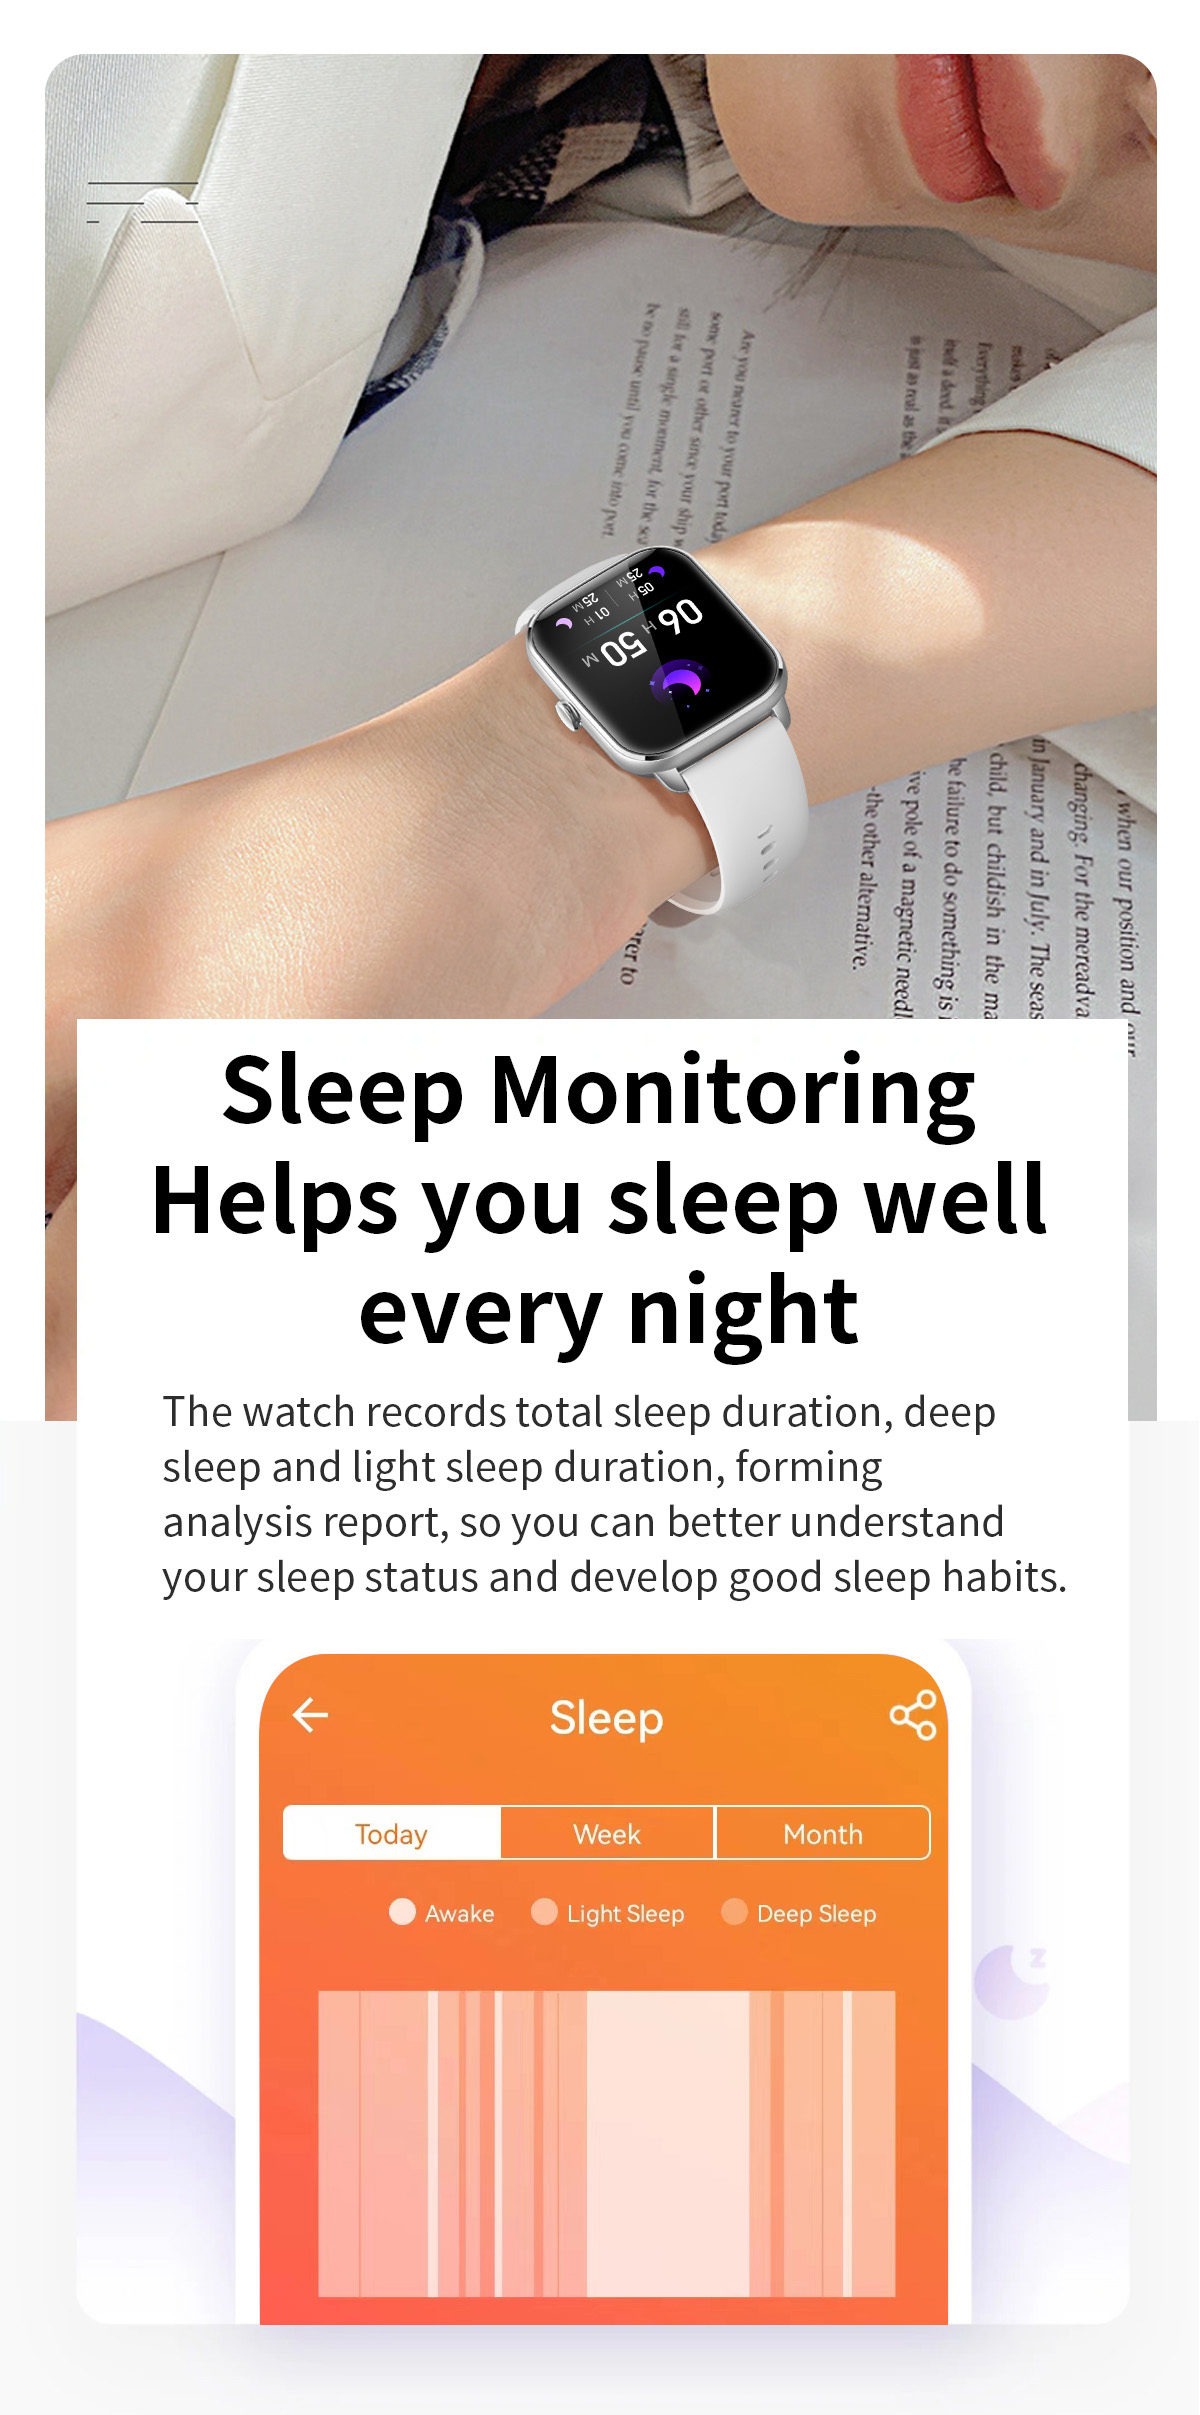 COLMI C61 Smartwatch 1.9 pollici a schermo intero Bluetooth Calling cardiofrequenzimetro Sleep Monitor 100 + modelli sportivi Smart Watch per uomo donna